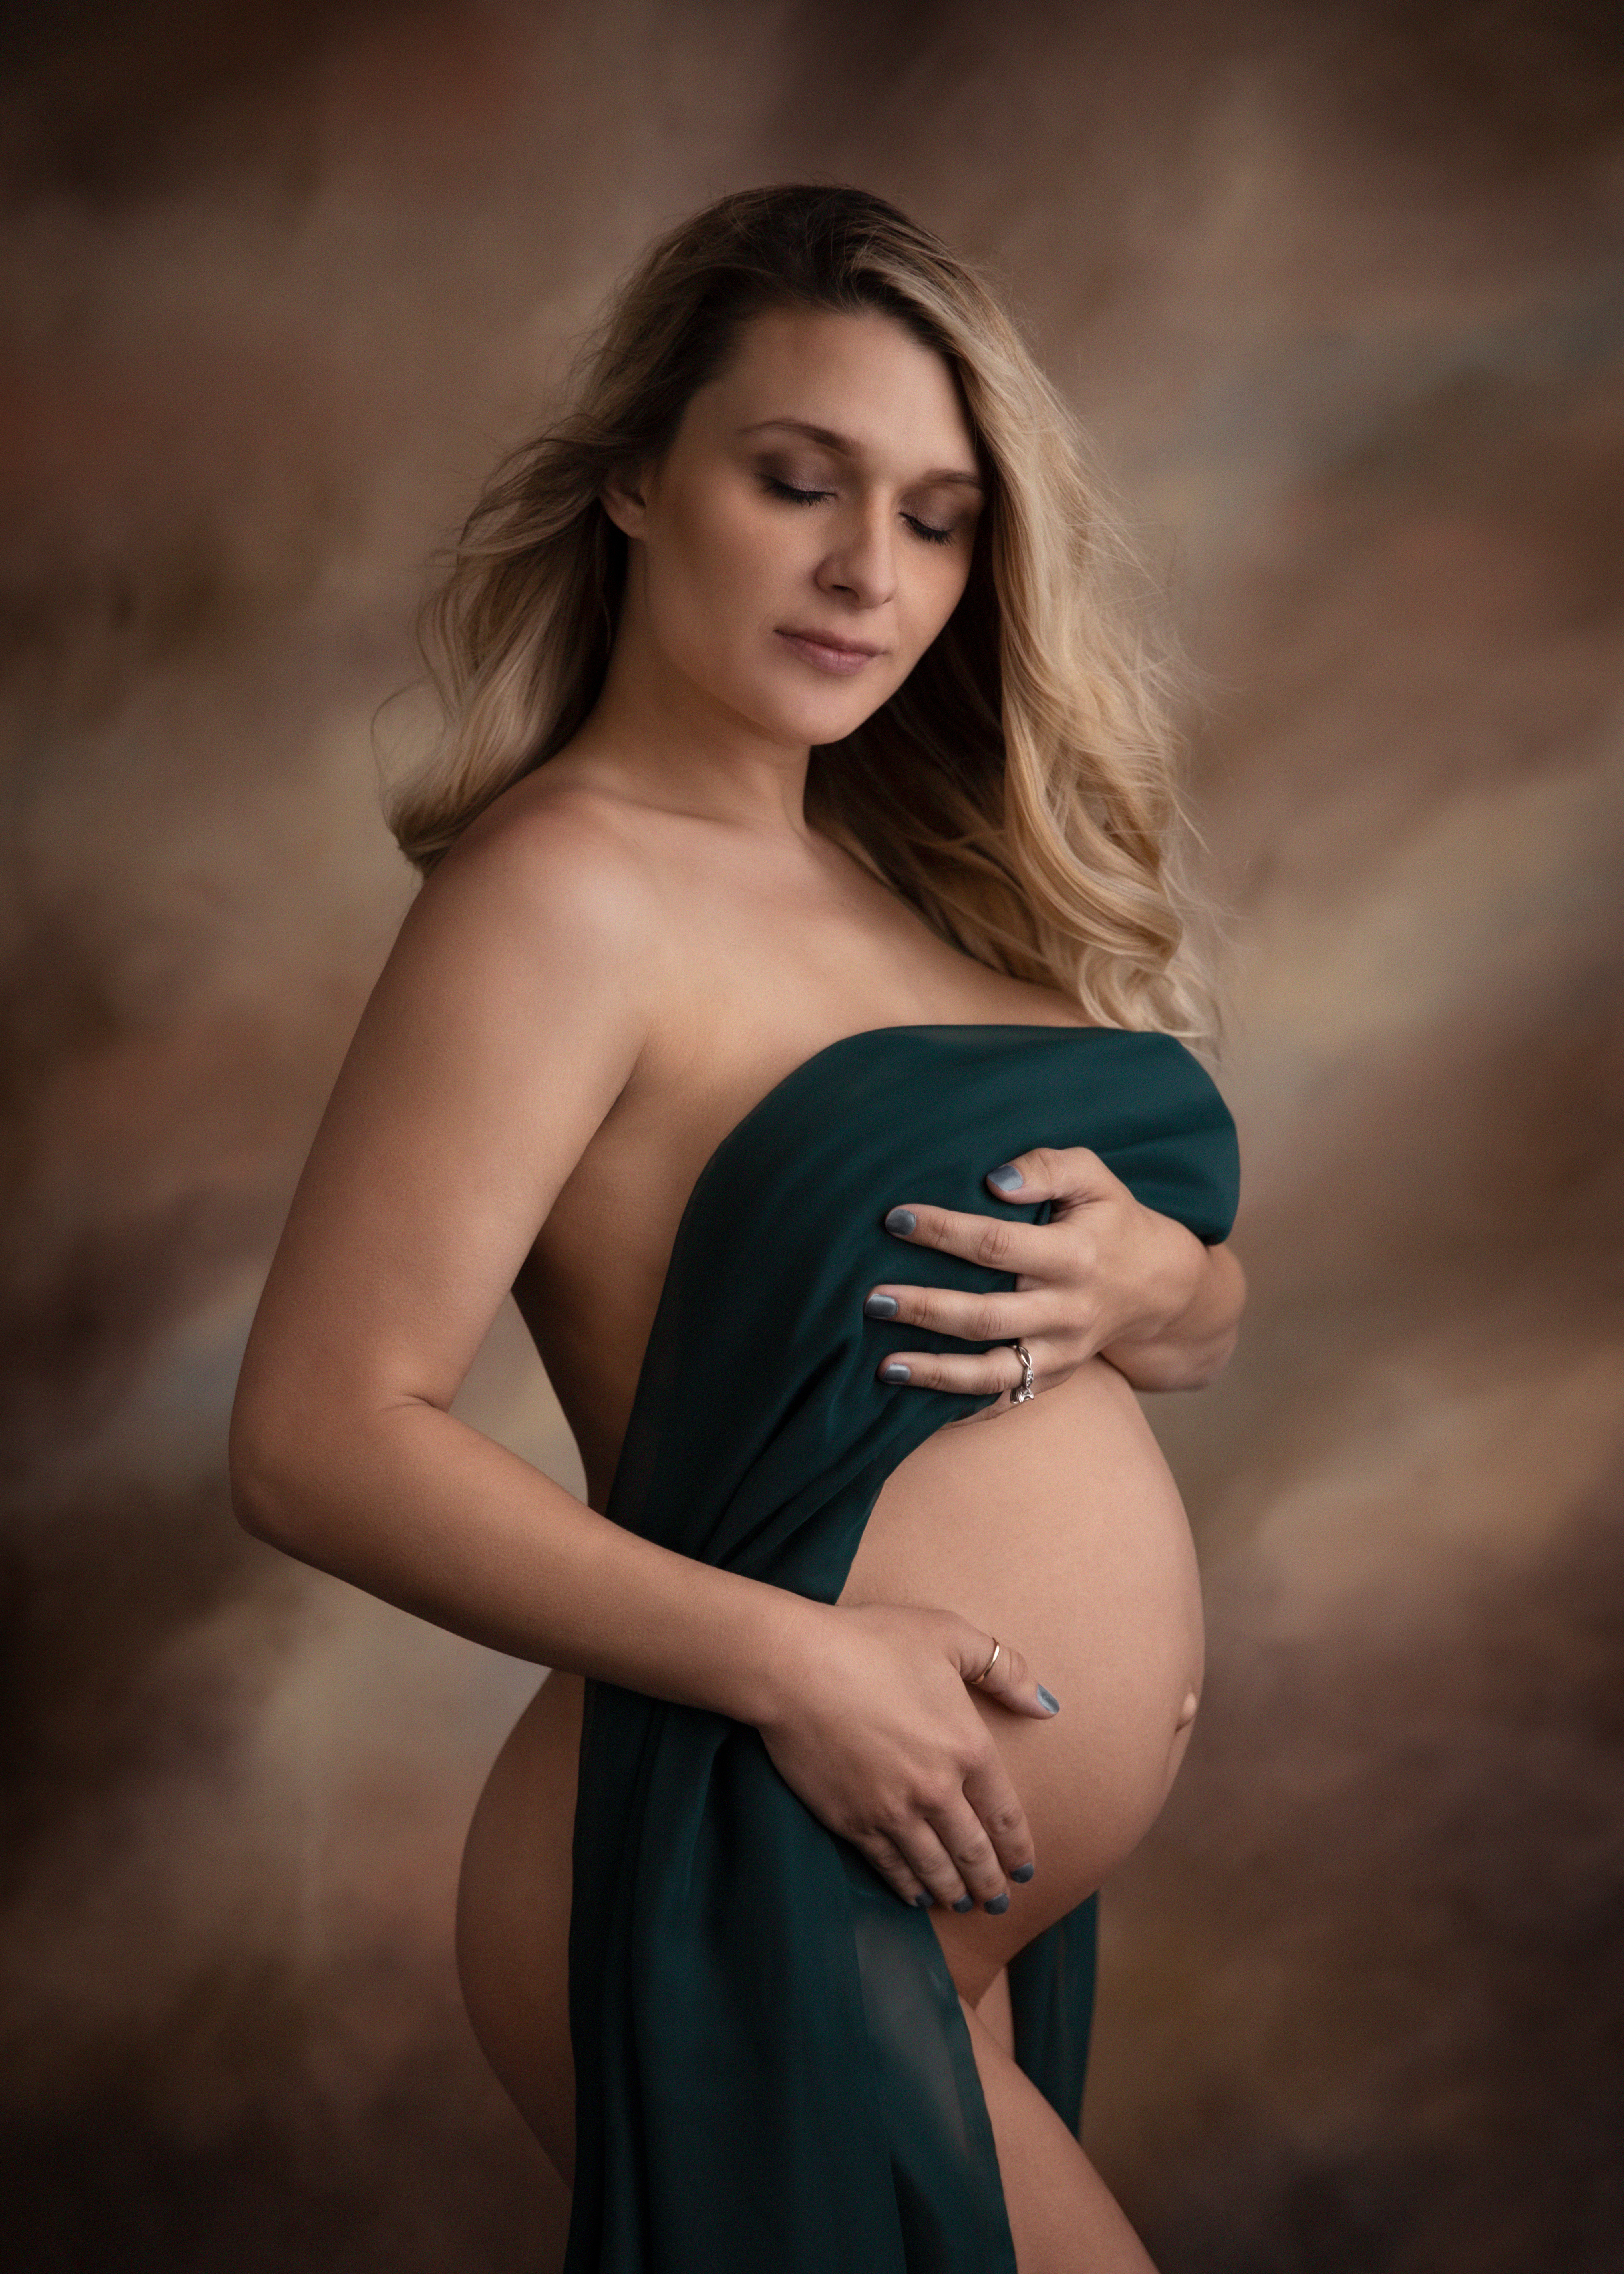 https://feliciasaundersphotography.com/wp-content/uploads/2021/11/Maternity-Photography-Newborn-Photography-Boudoir-Photography-Las-Vegas-Henderson-Family-Portrait-111-1.jpg